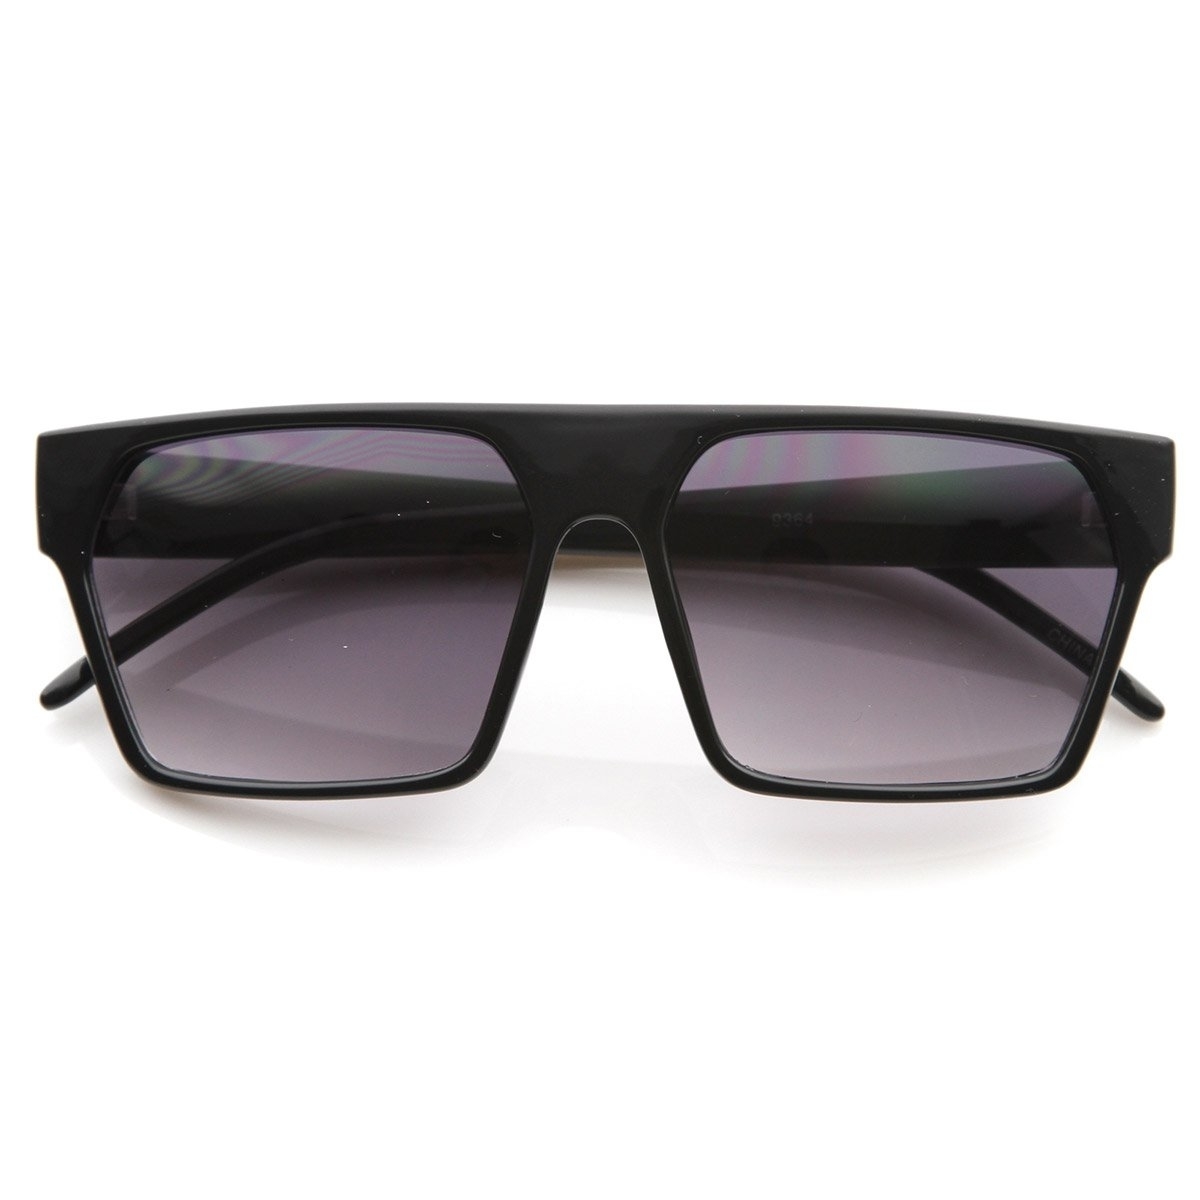 Designer Inspired Triangular Shaped Frame Flat Top Aviator Sunglasses - Matte Tortoise